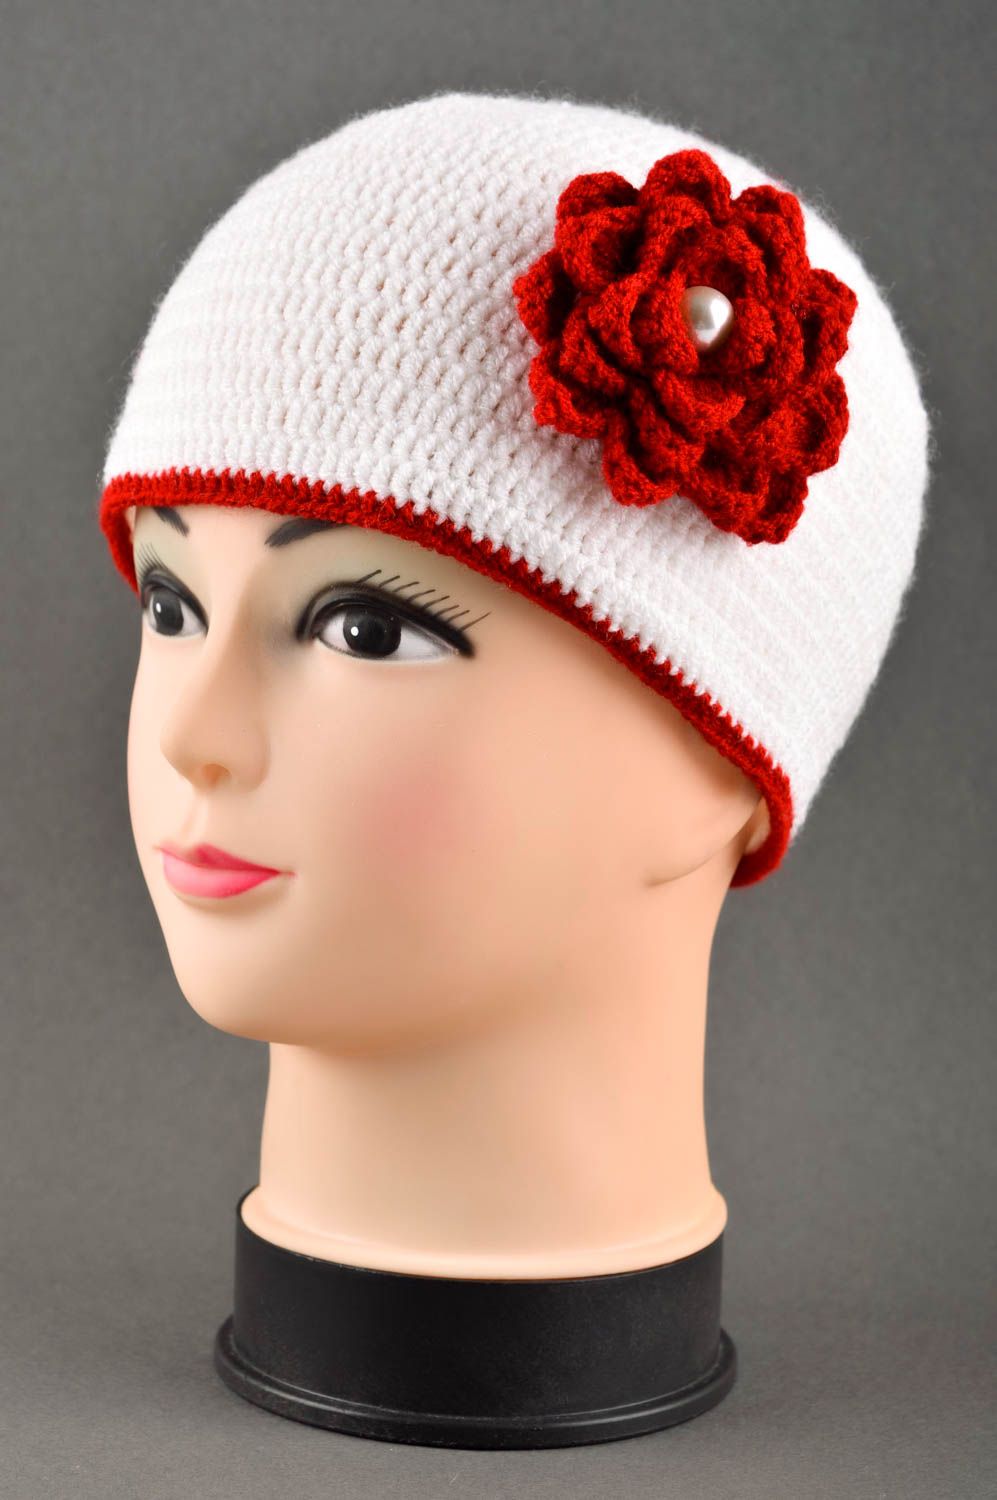 Handmade hat winter hat for children gift for girl warm cap knitted hat photo 1